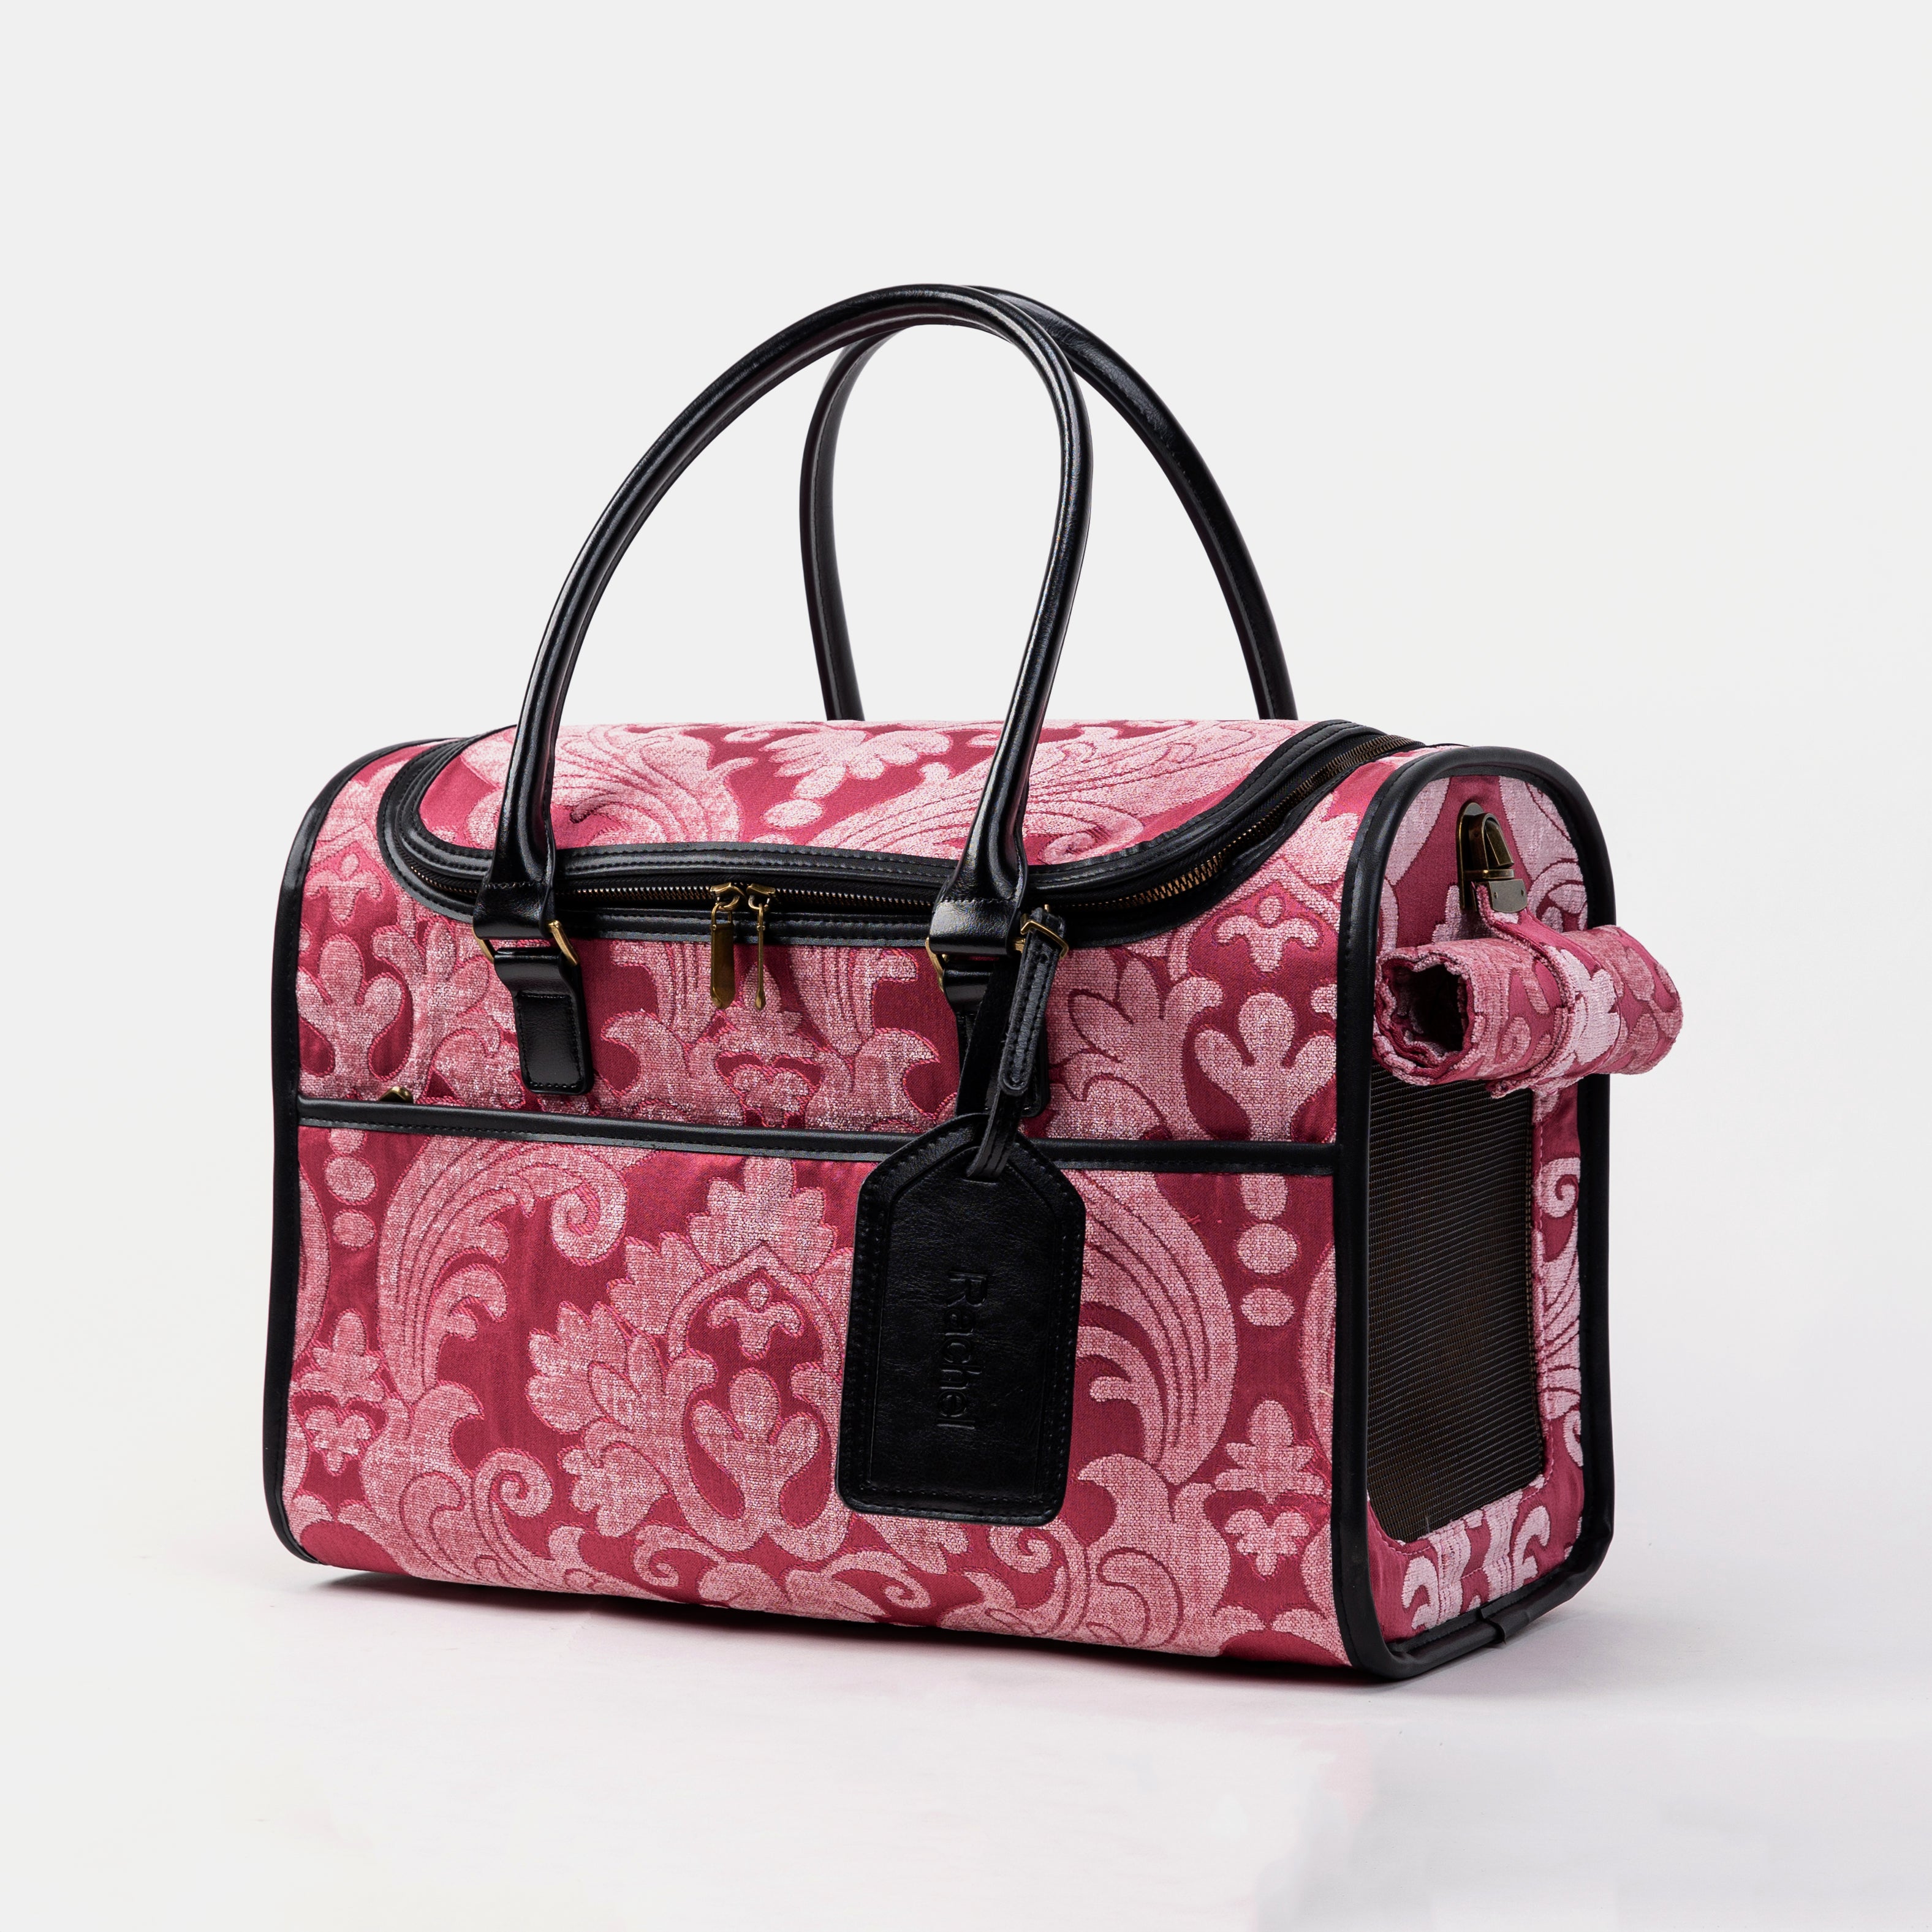 Travel Dog Carrier Bag Queen Rose  PinkMain